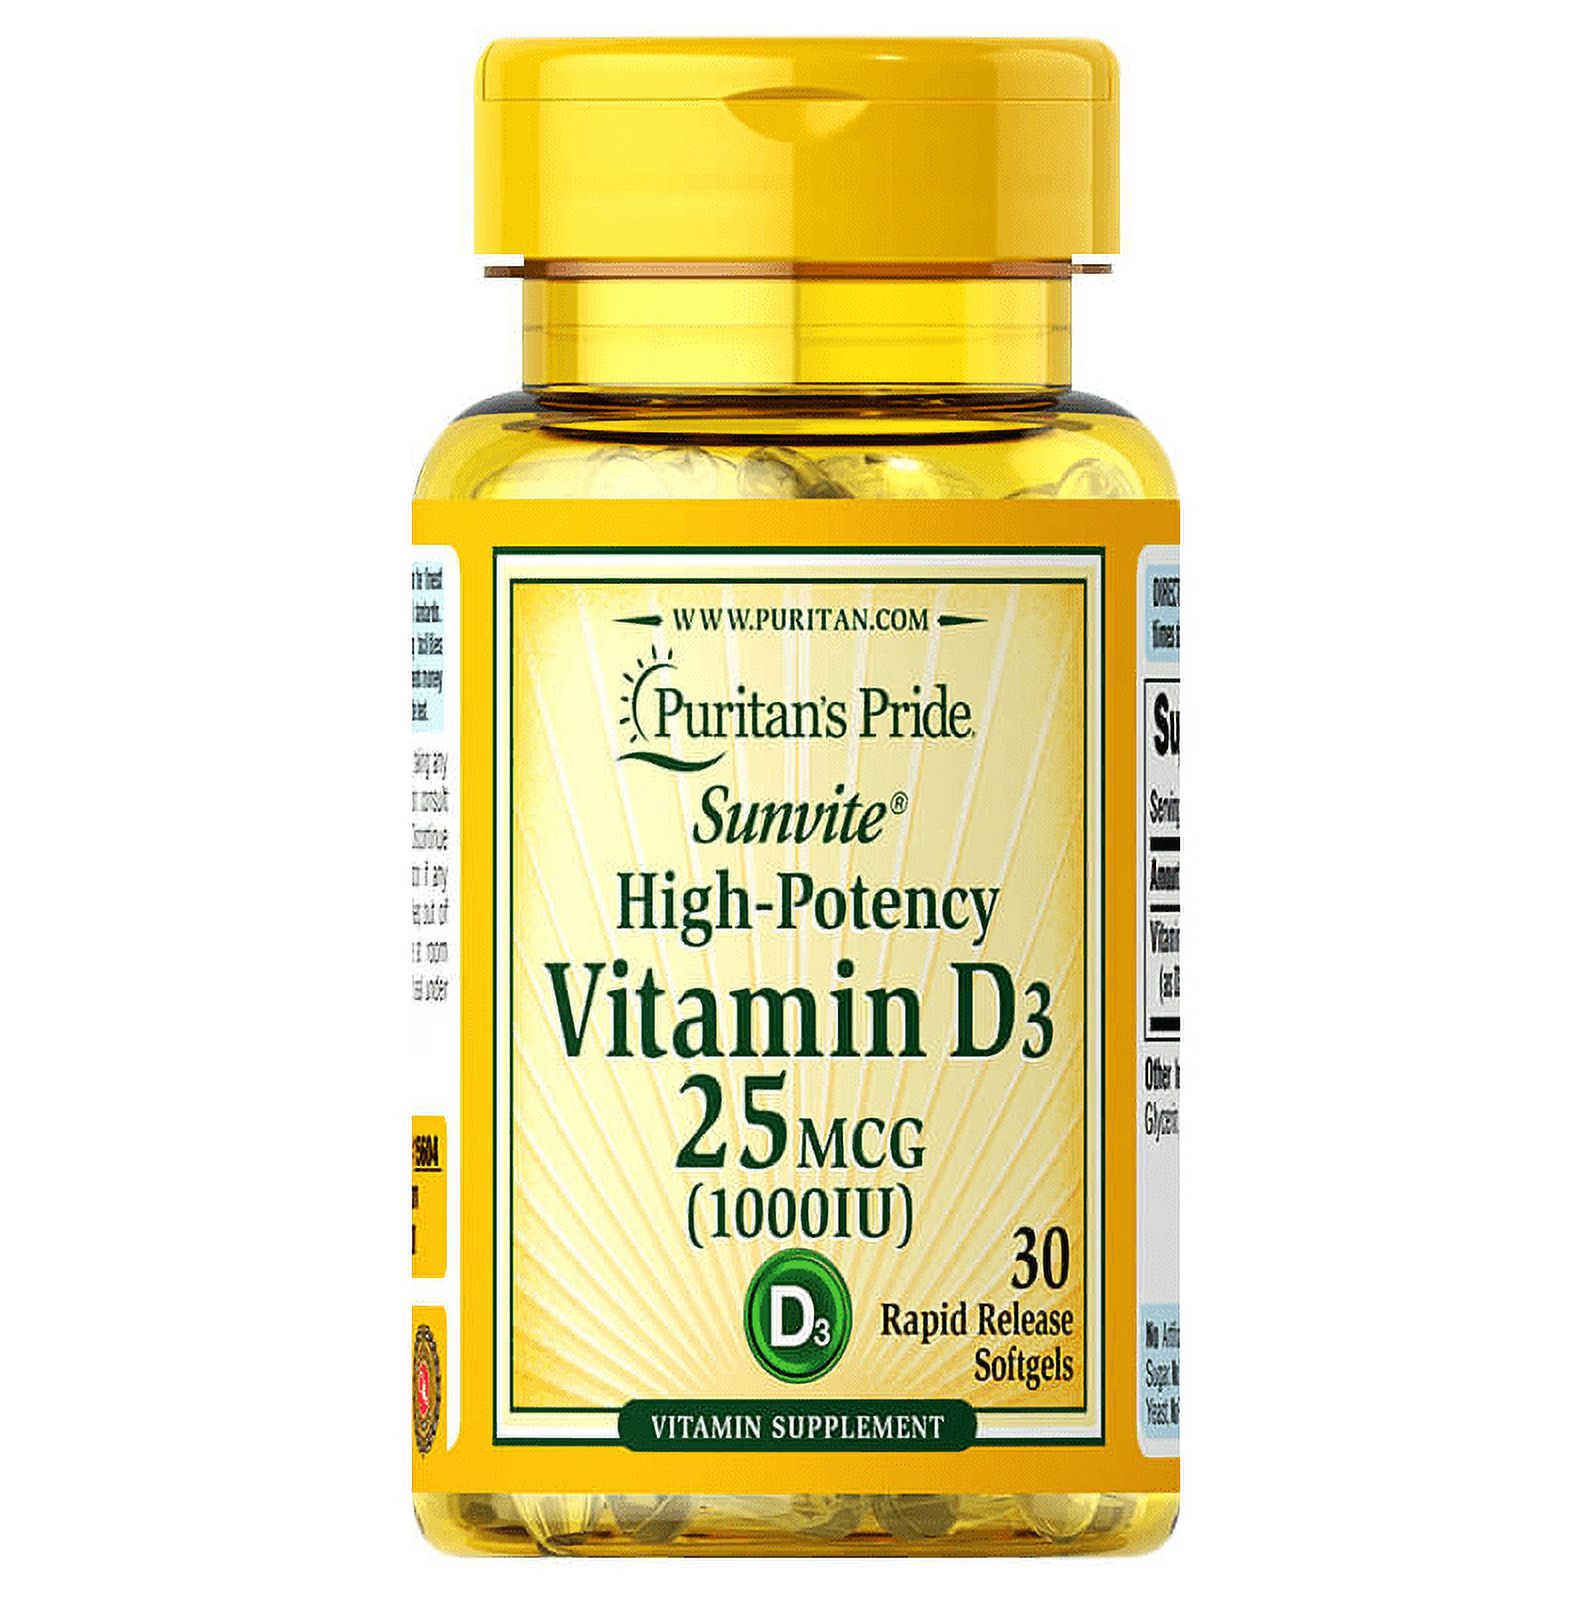 Puritan's Pride High Potency Vitamin D3 1000IU 30 easy to swallow rapid release softgels - image 1 of 3